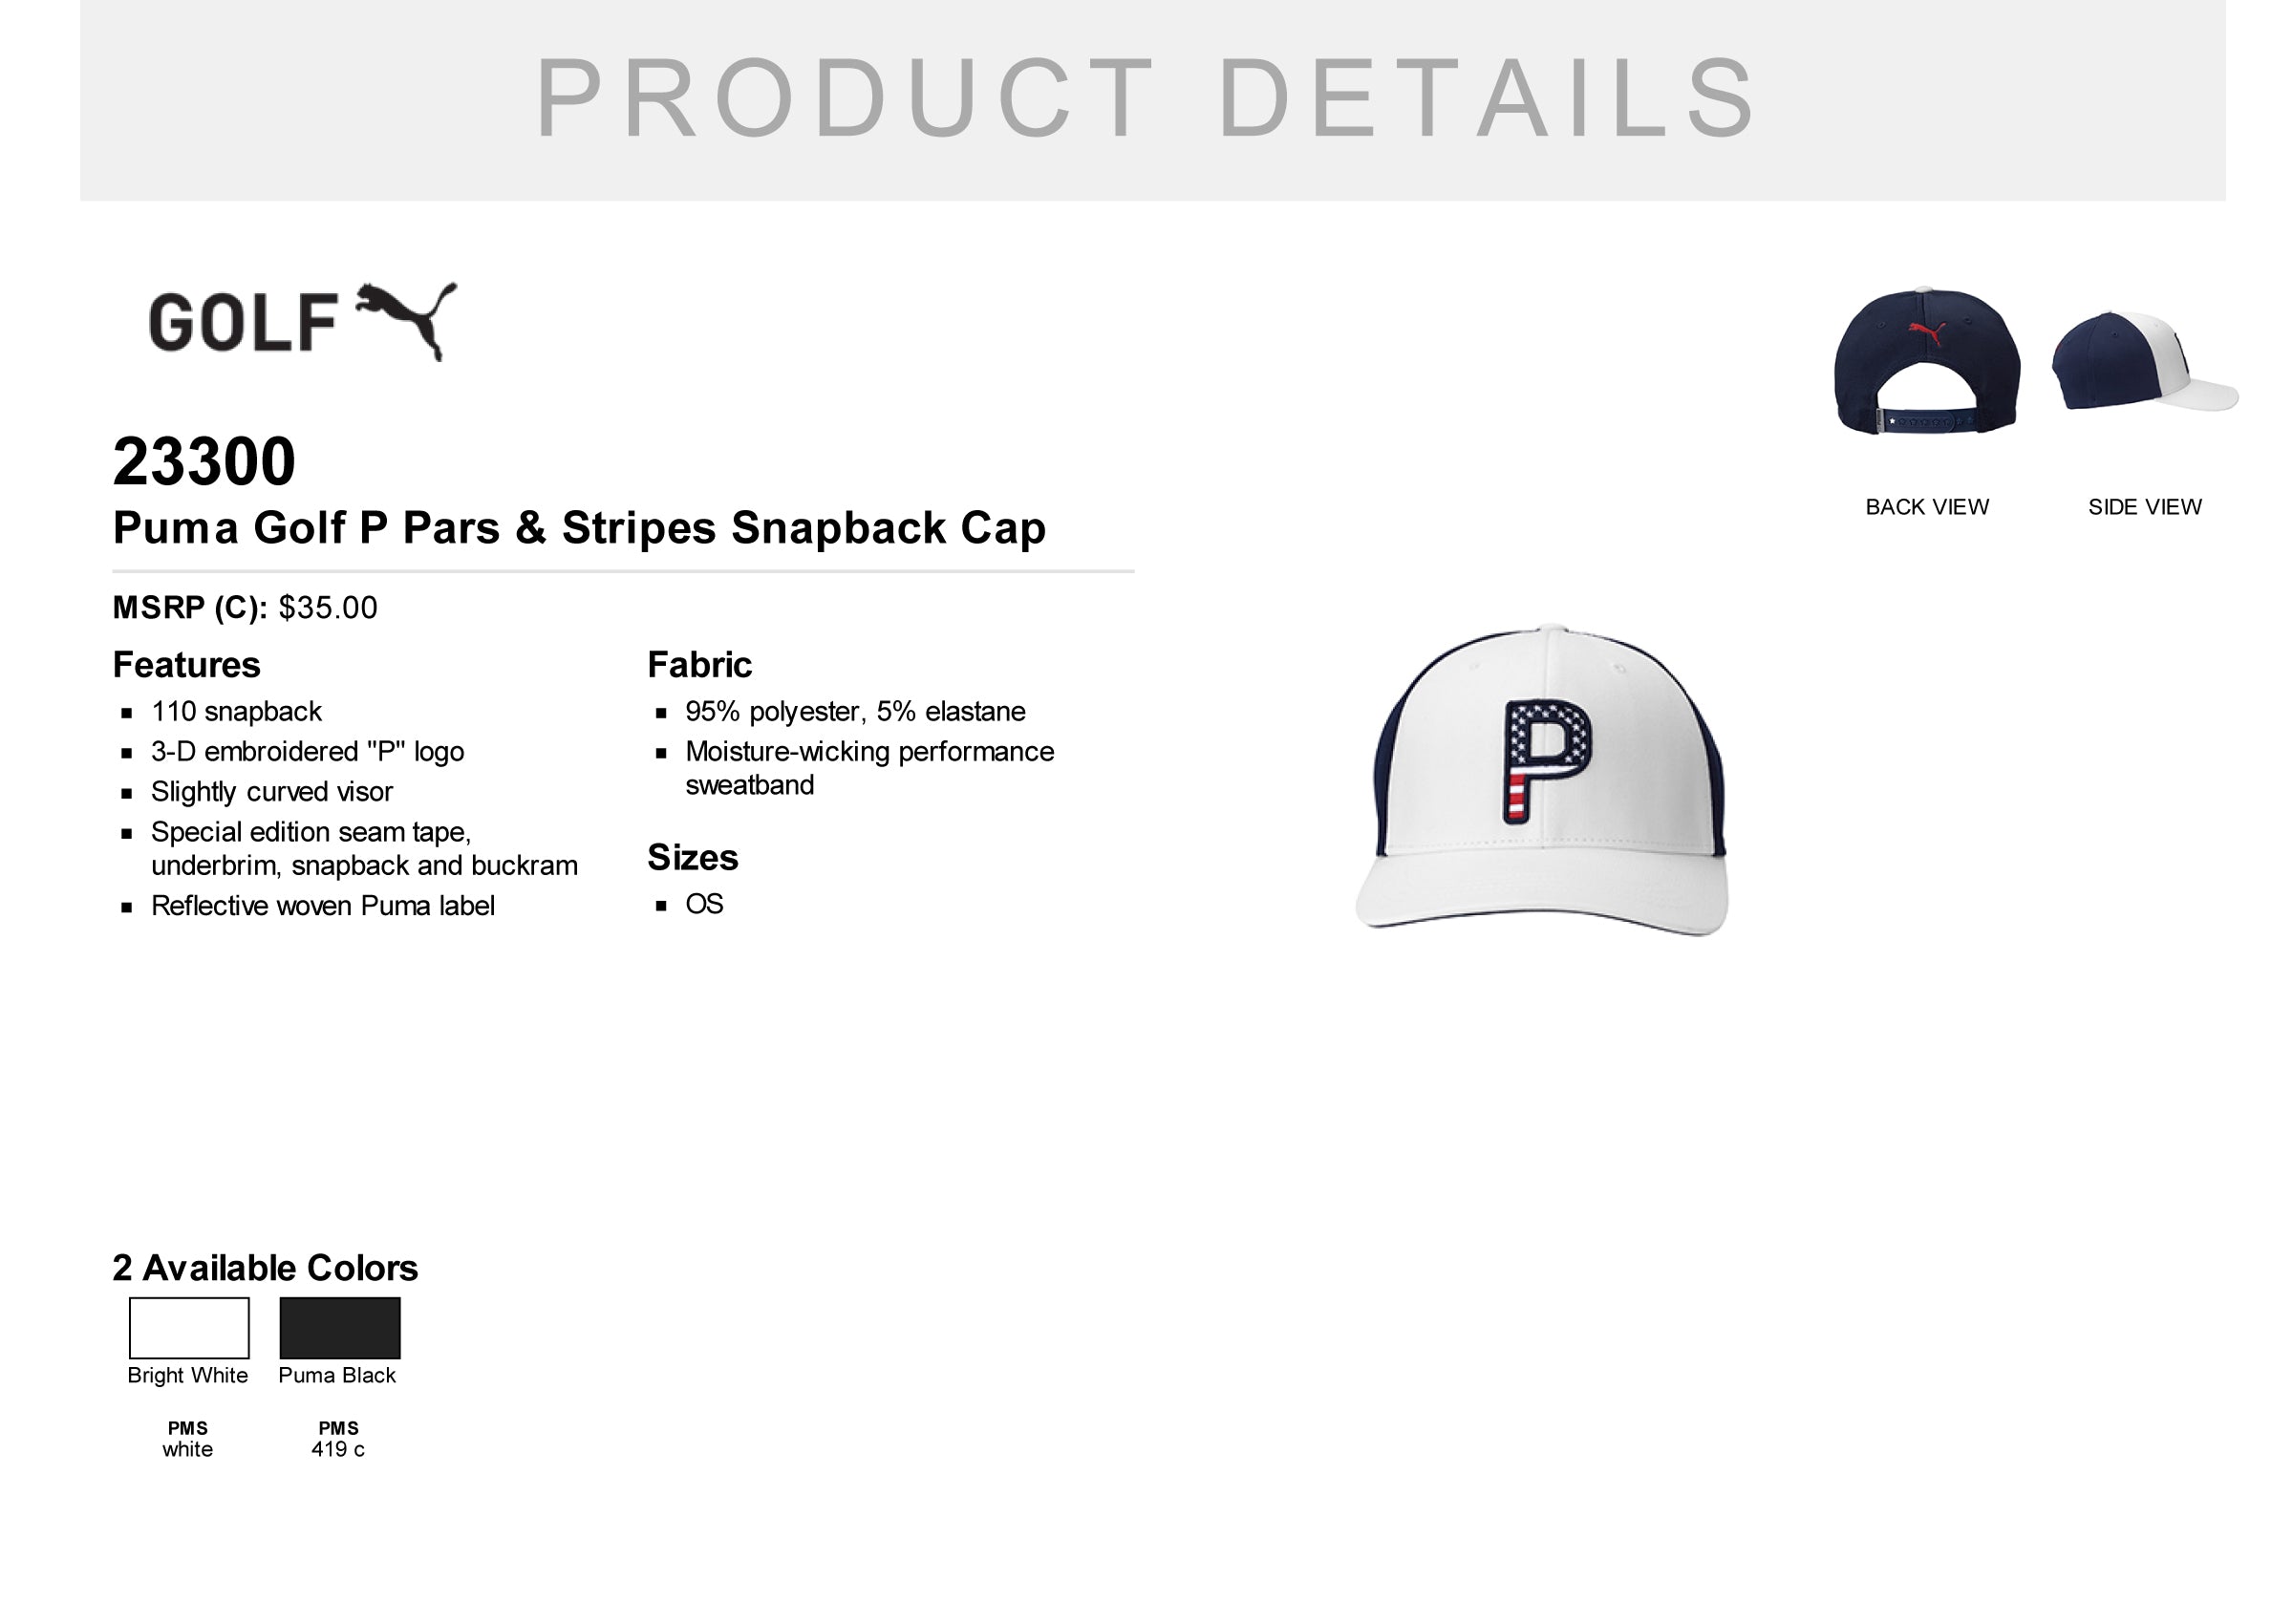 Puma Golf P Pars & Stripes Snapback Cap